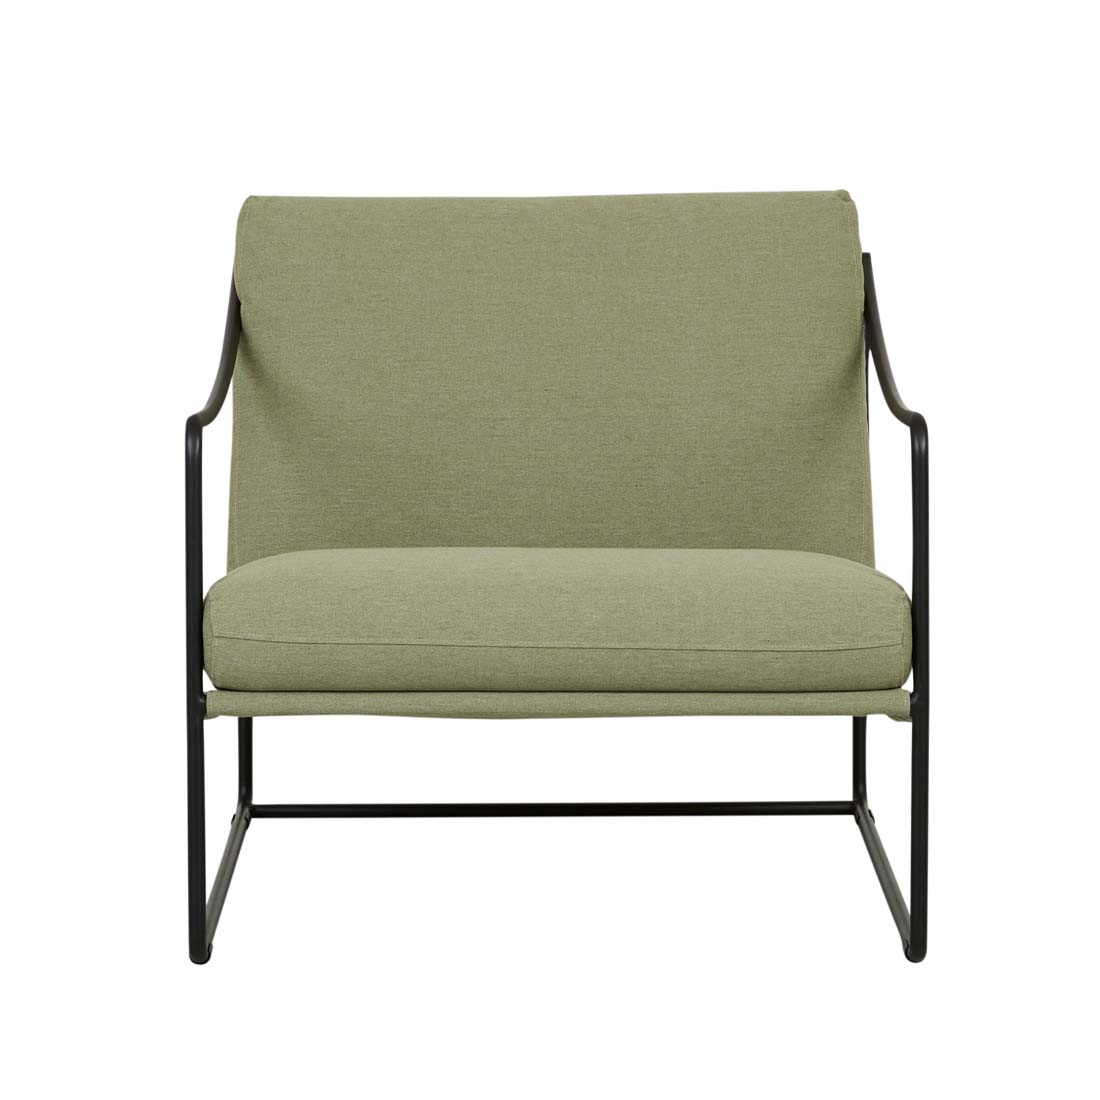 Allegra Outdoor Sofa Chair image 36